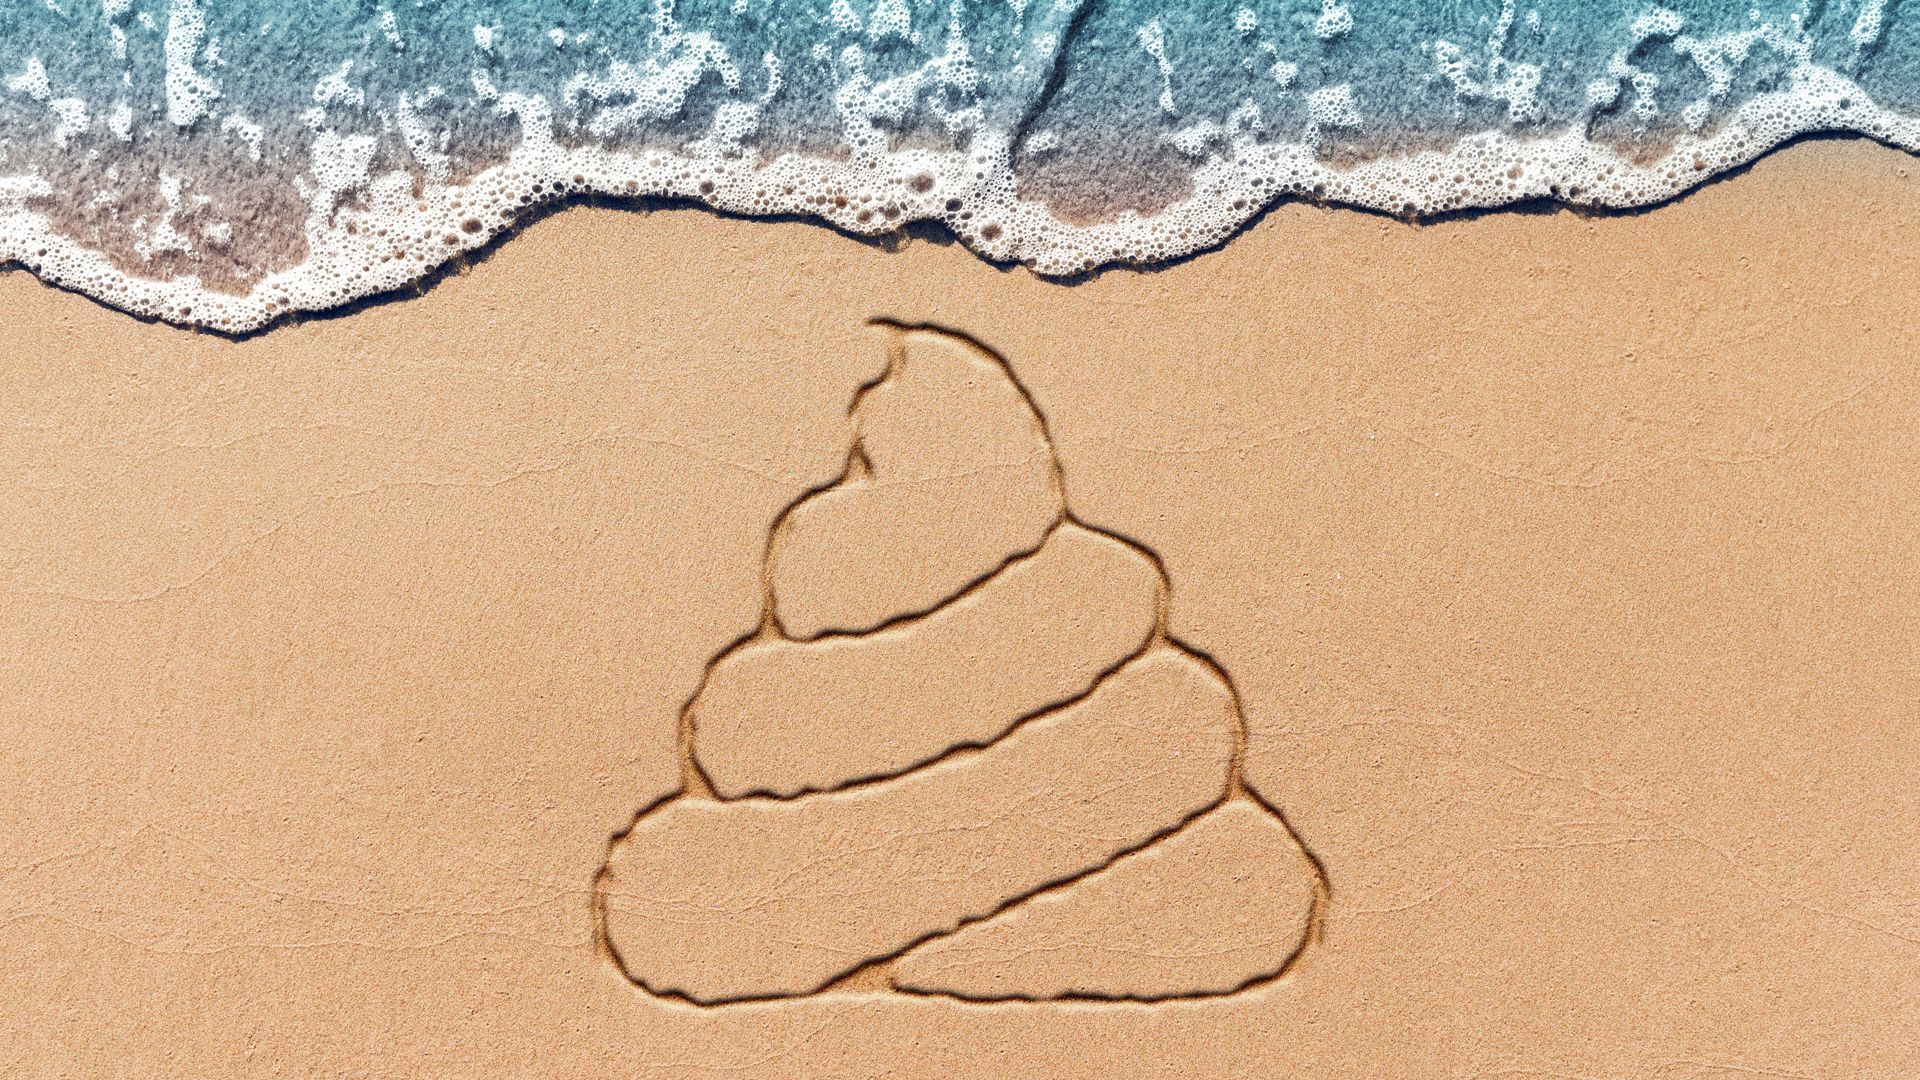 Illustration of a poop emoji drawn in the sand. 